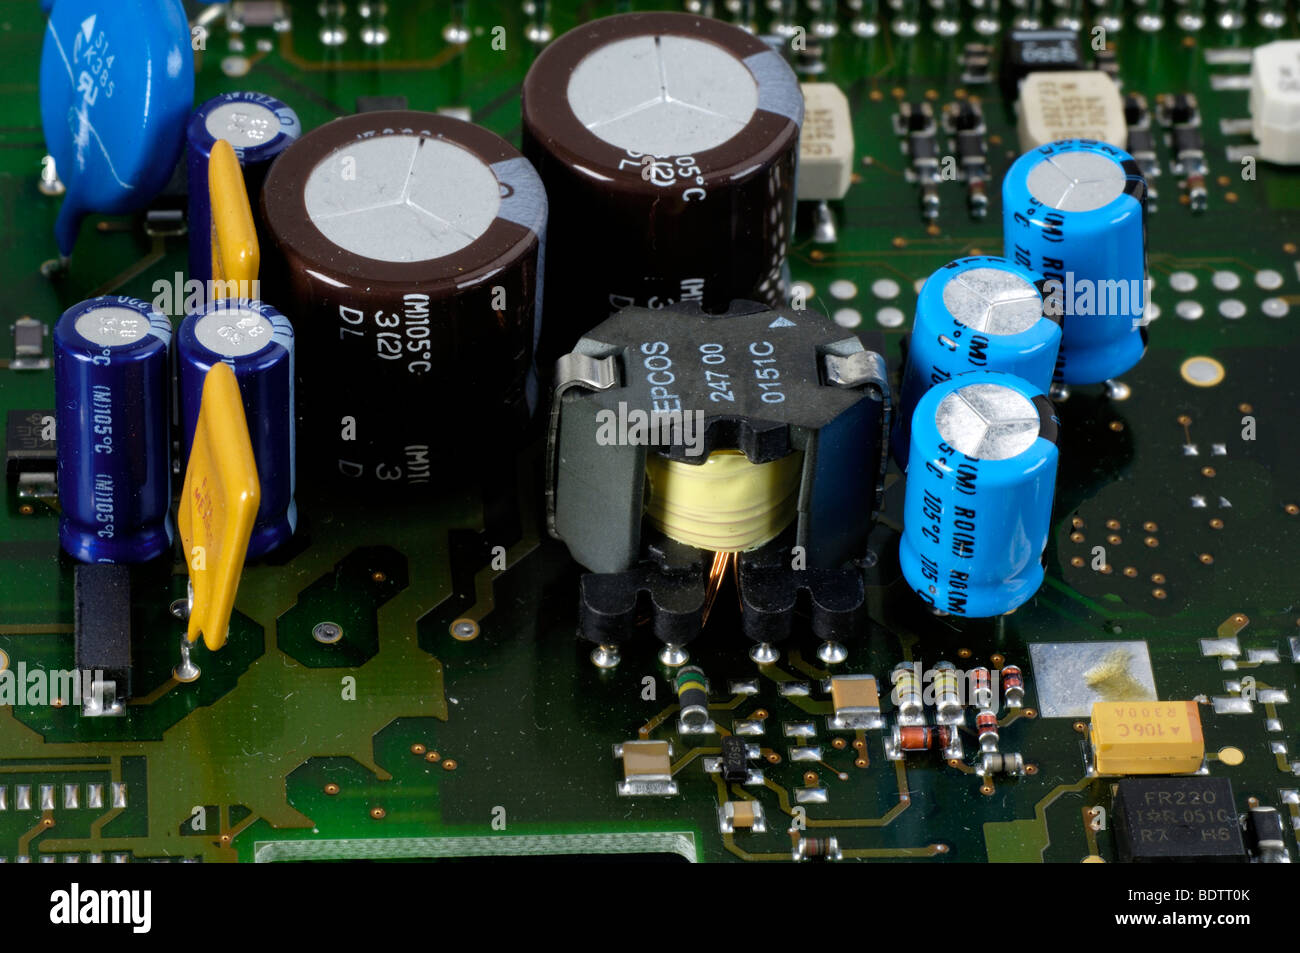 Motherboard Computer Hardware EDV chip Board Stock Photo